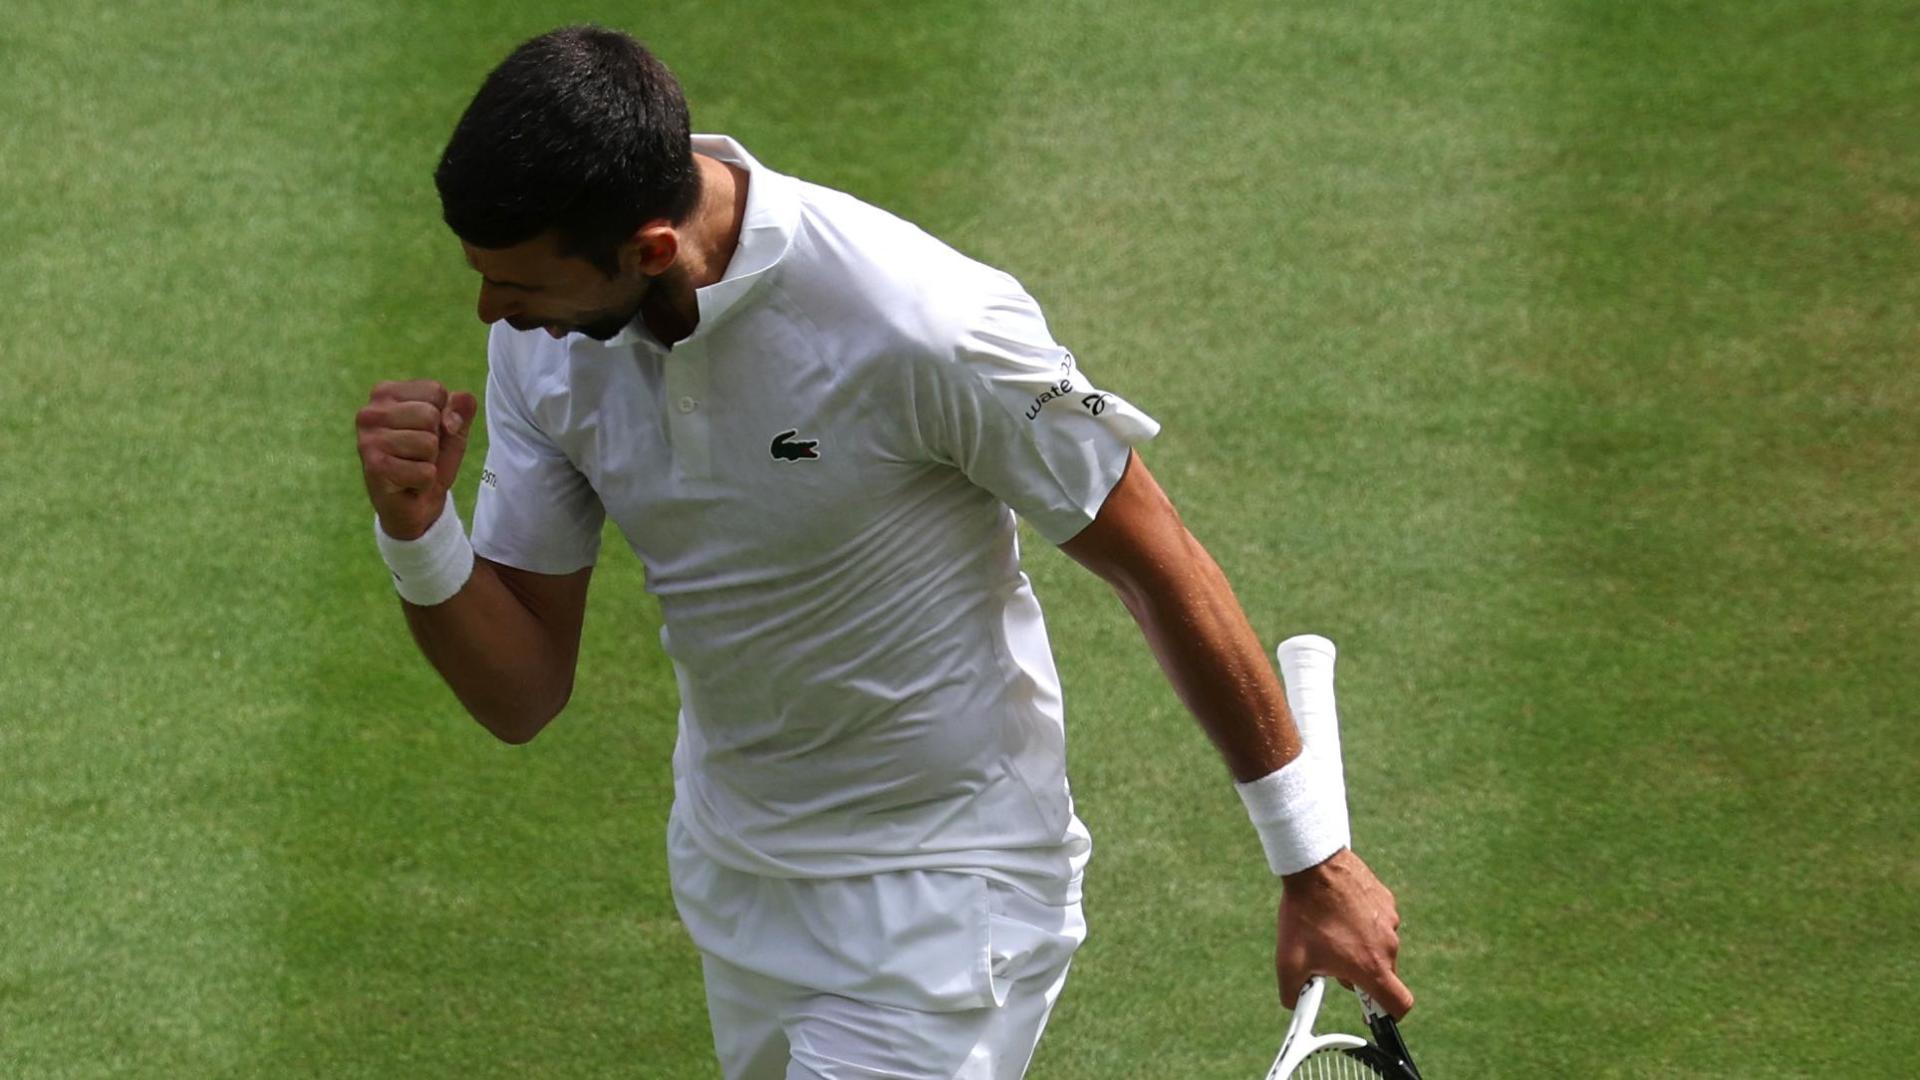 Djokovic takes the first set 6-1 in Wimbledon final